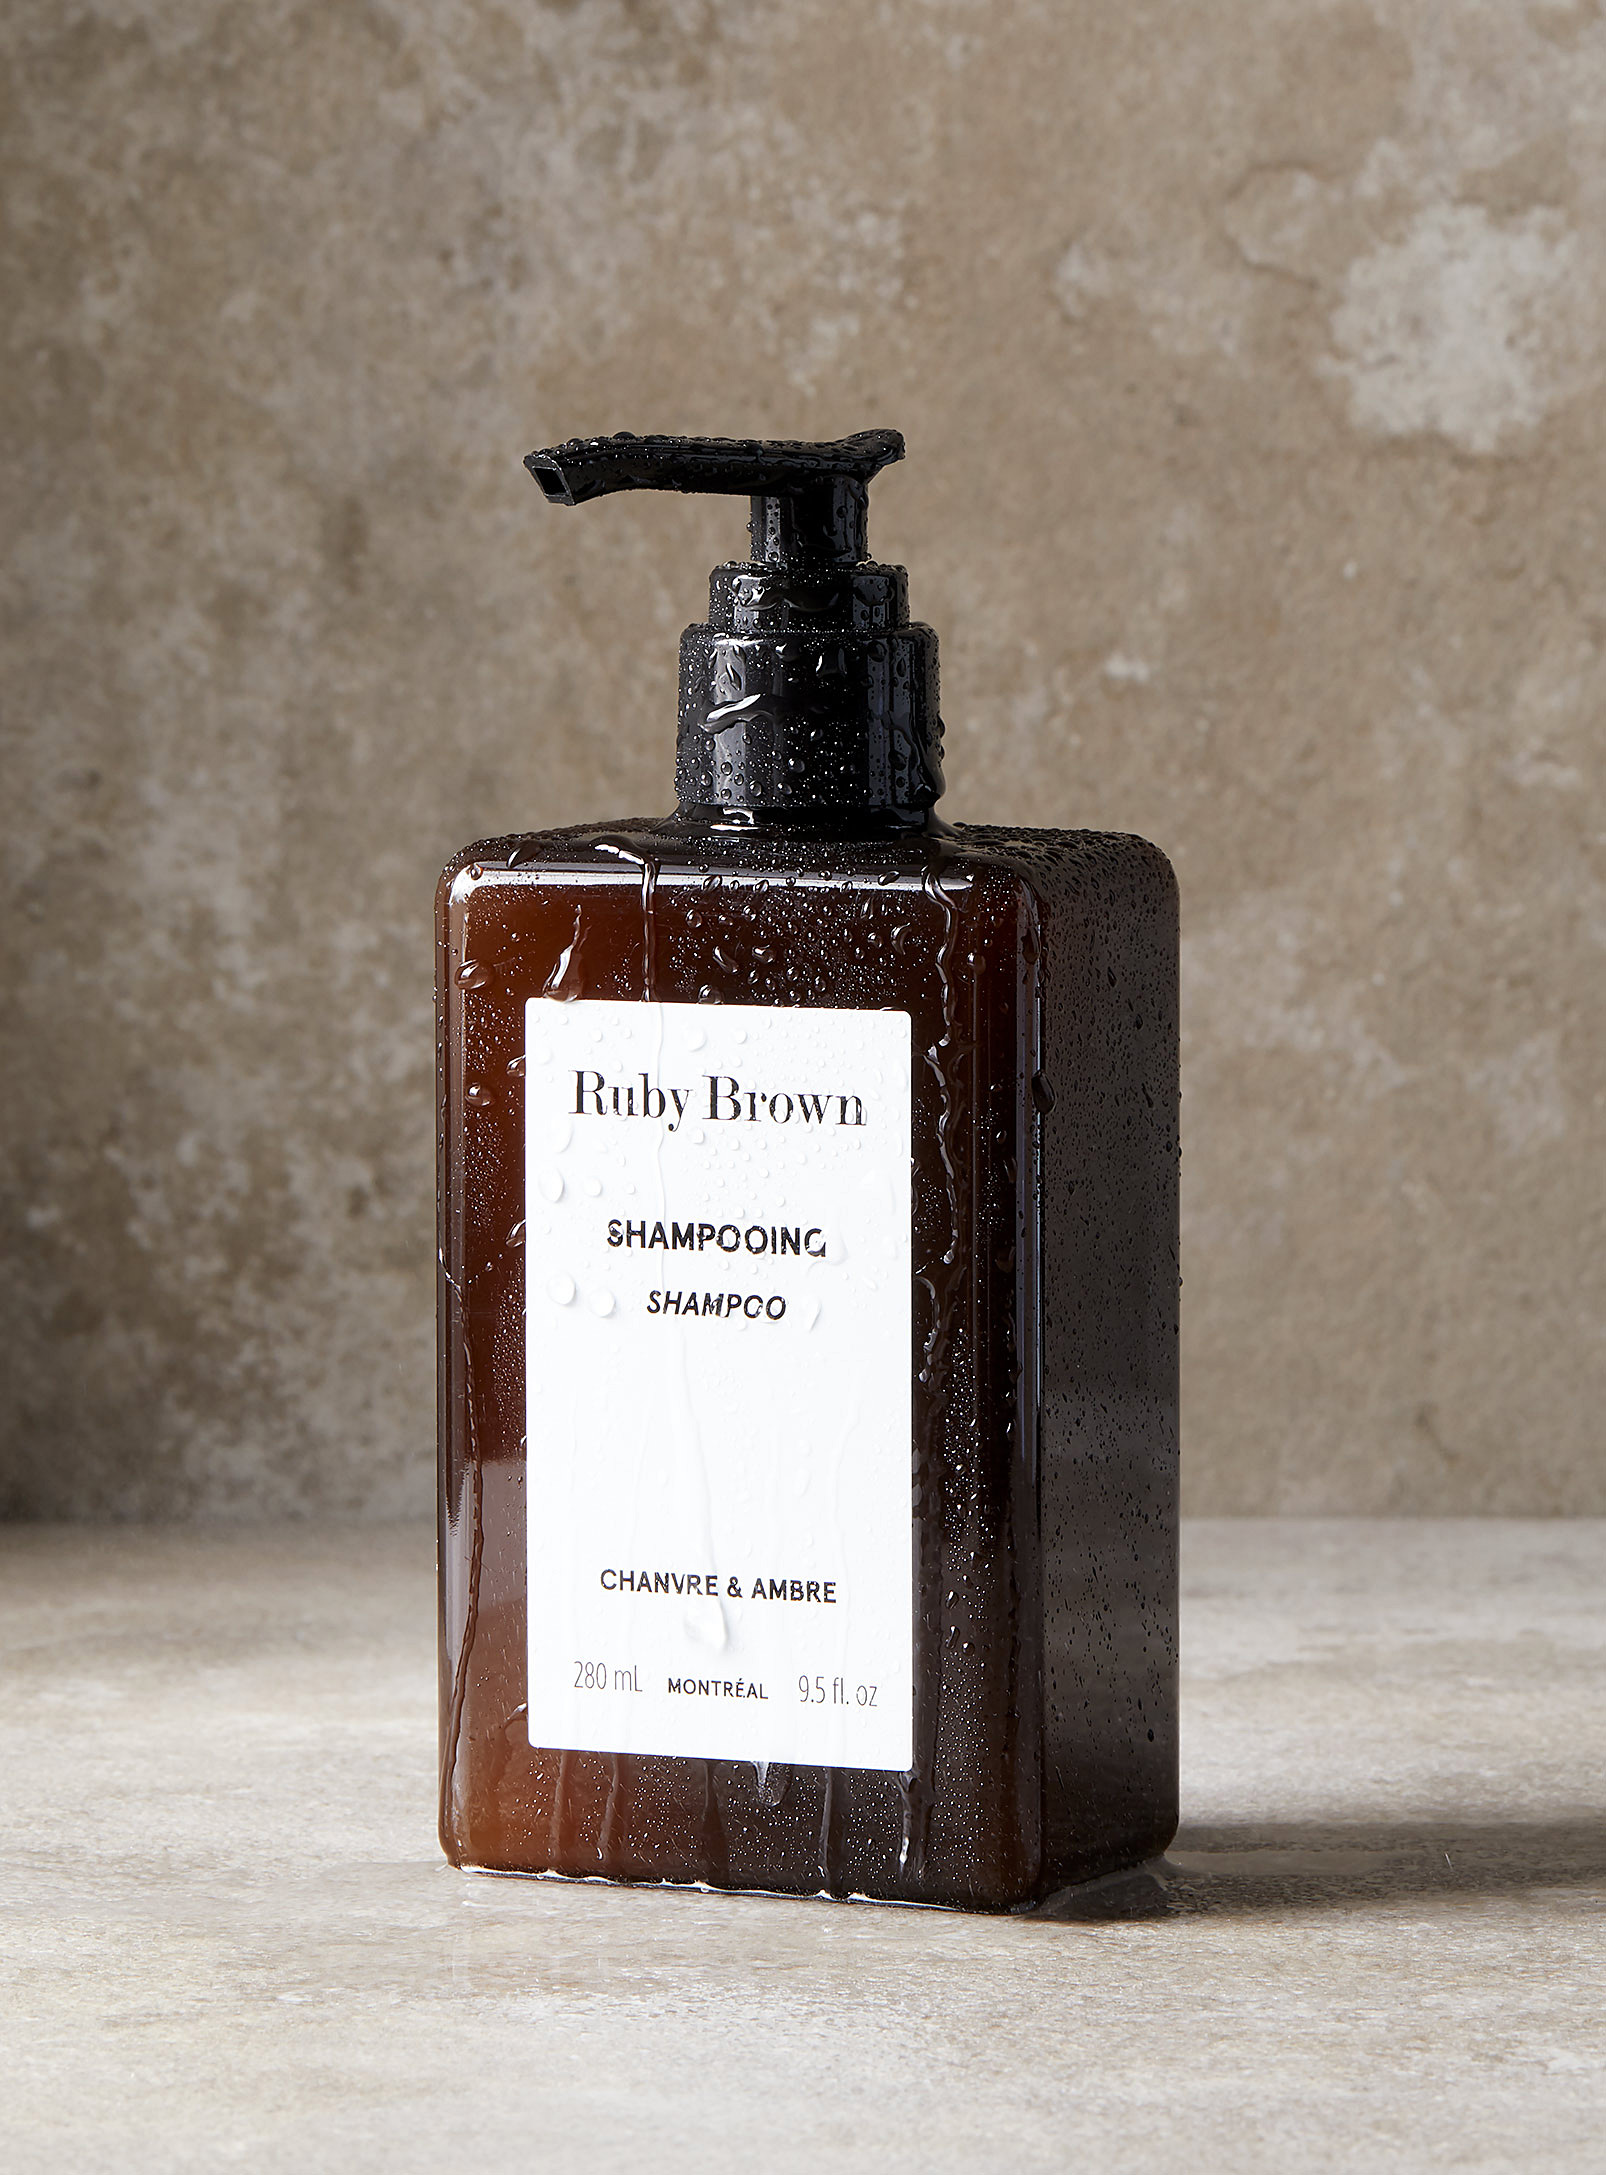 Ruby Brown - Le shampoing chanvre et ambre